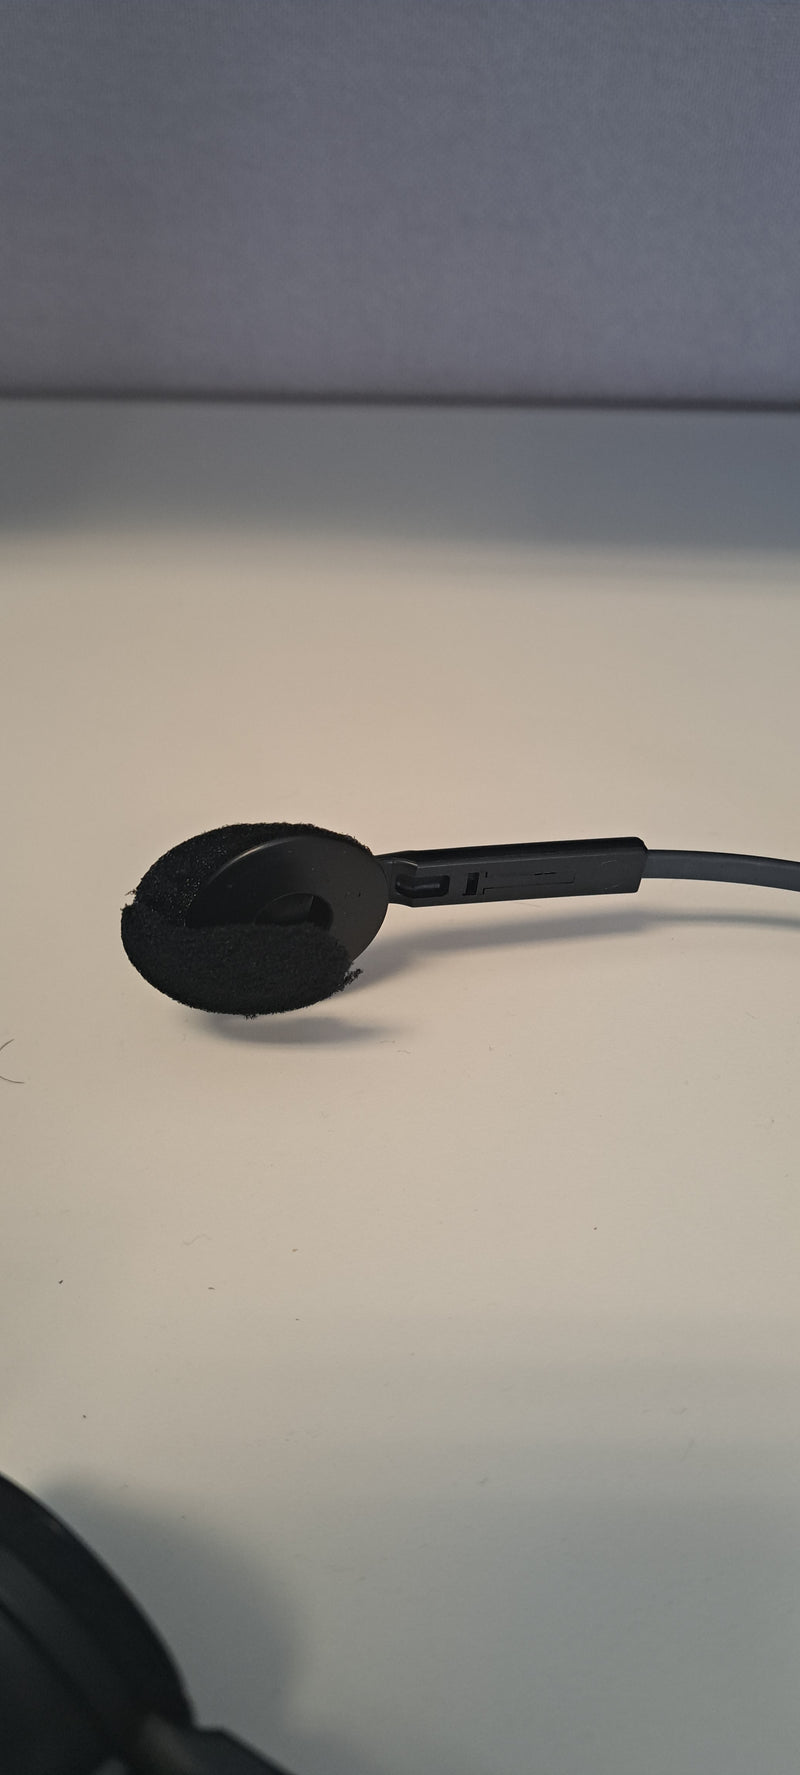 Audio-Technica ATM 75 Cardioid Headworn Condenser Microphone (USED)